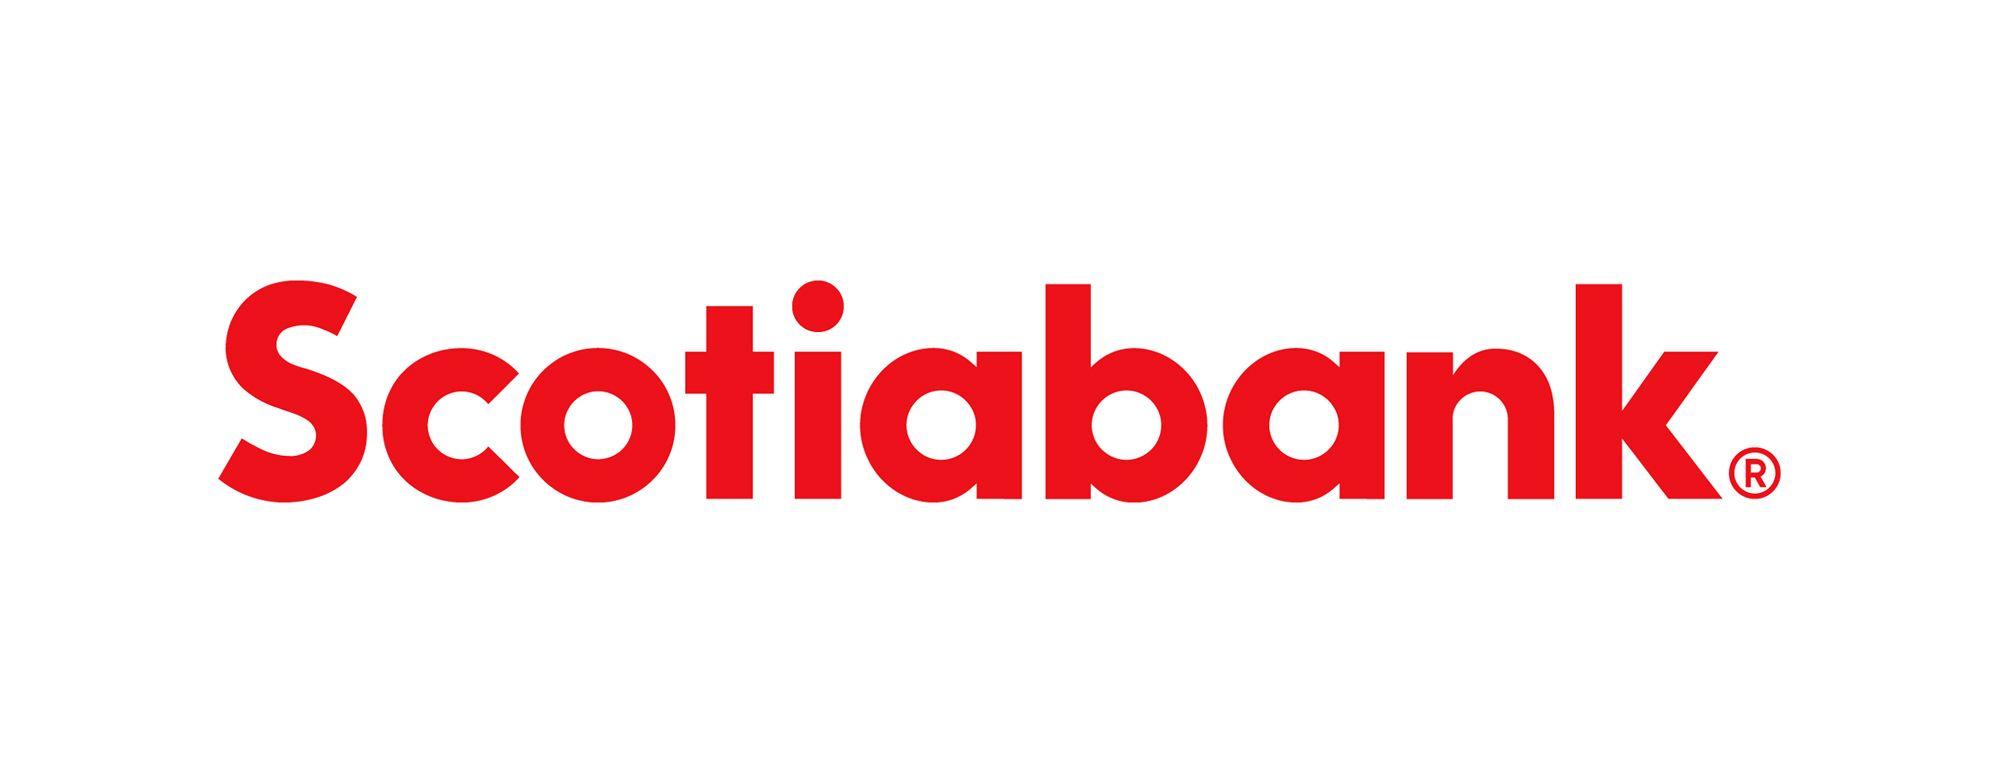 Scotiabank Logo - Less is More? Scotiabank Rebrands their Identity - Alfalfa Studio